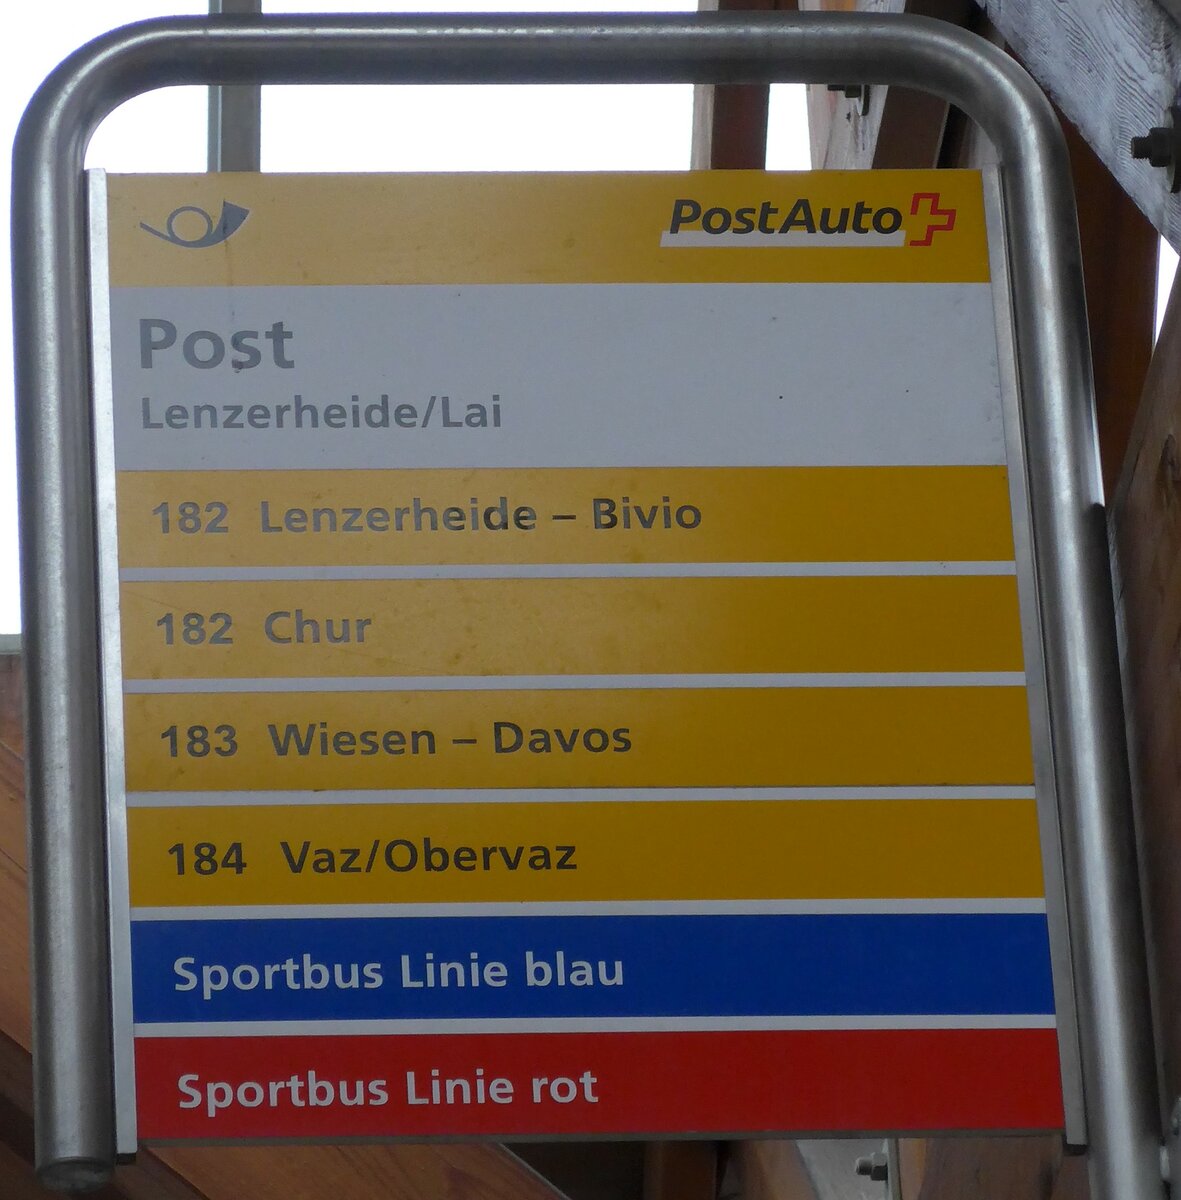 (168'255) - PostAuto/Sportbus Linie blau/Sportbus Linie rot-Haltestellenschild - Lenzerheide/Lai, Post - am 2. Januar 2016